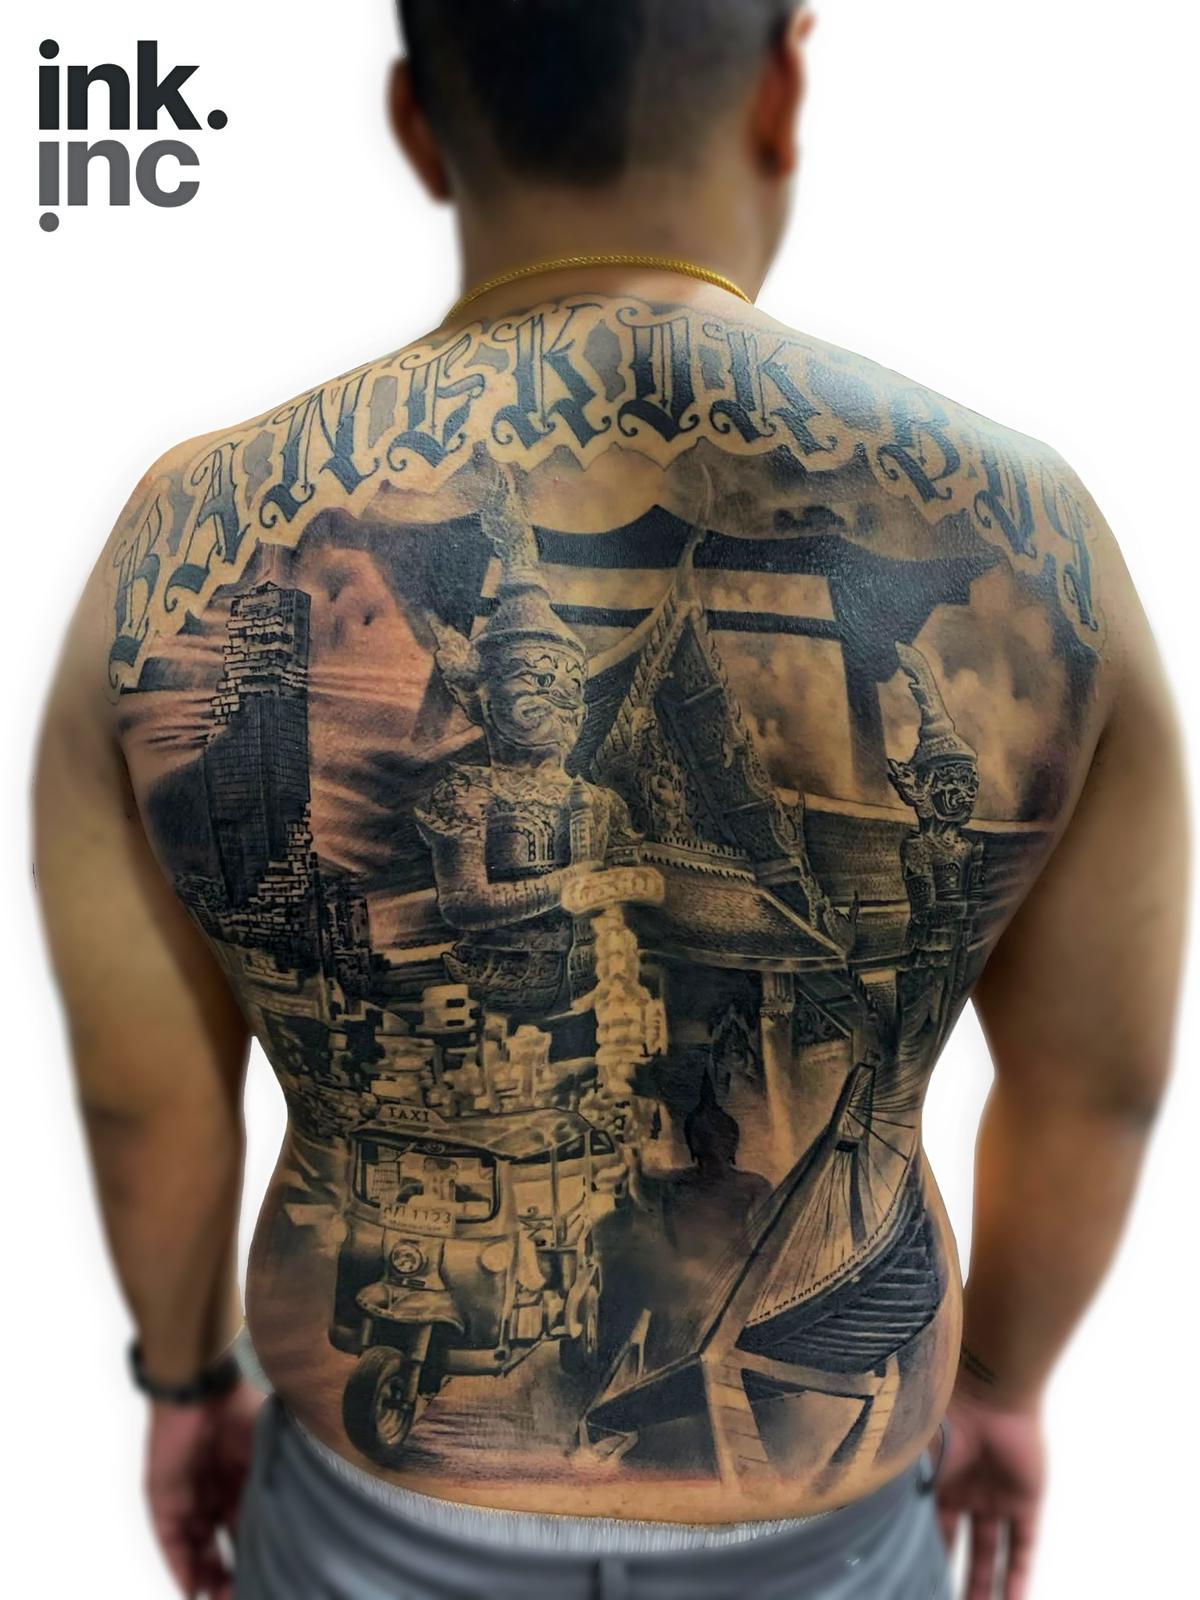 Black Work Tattoos | Ink Inc